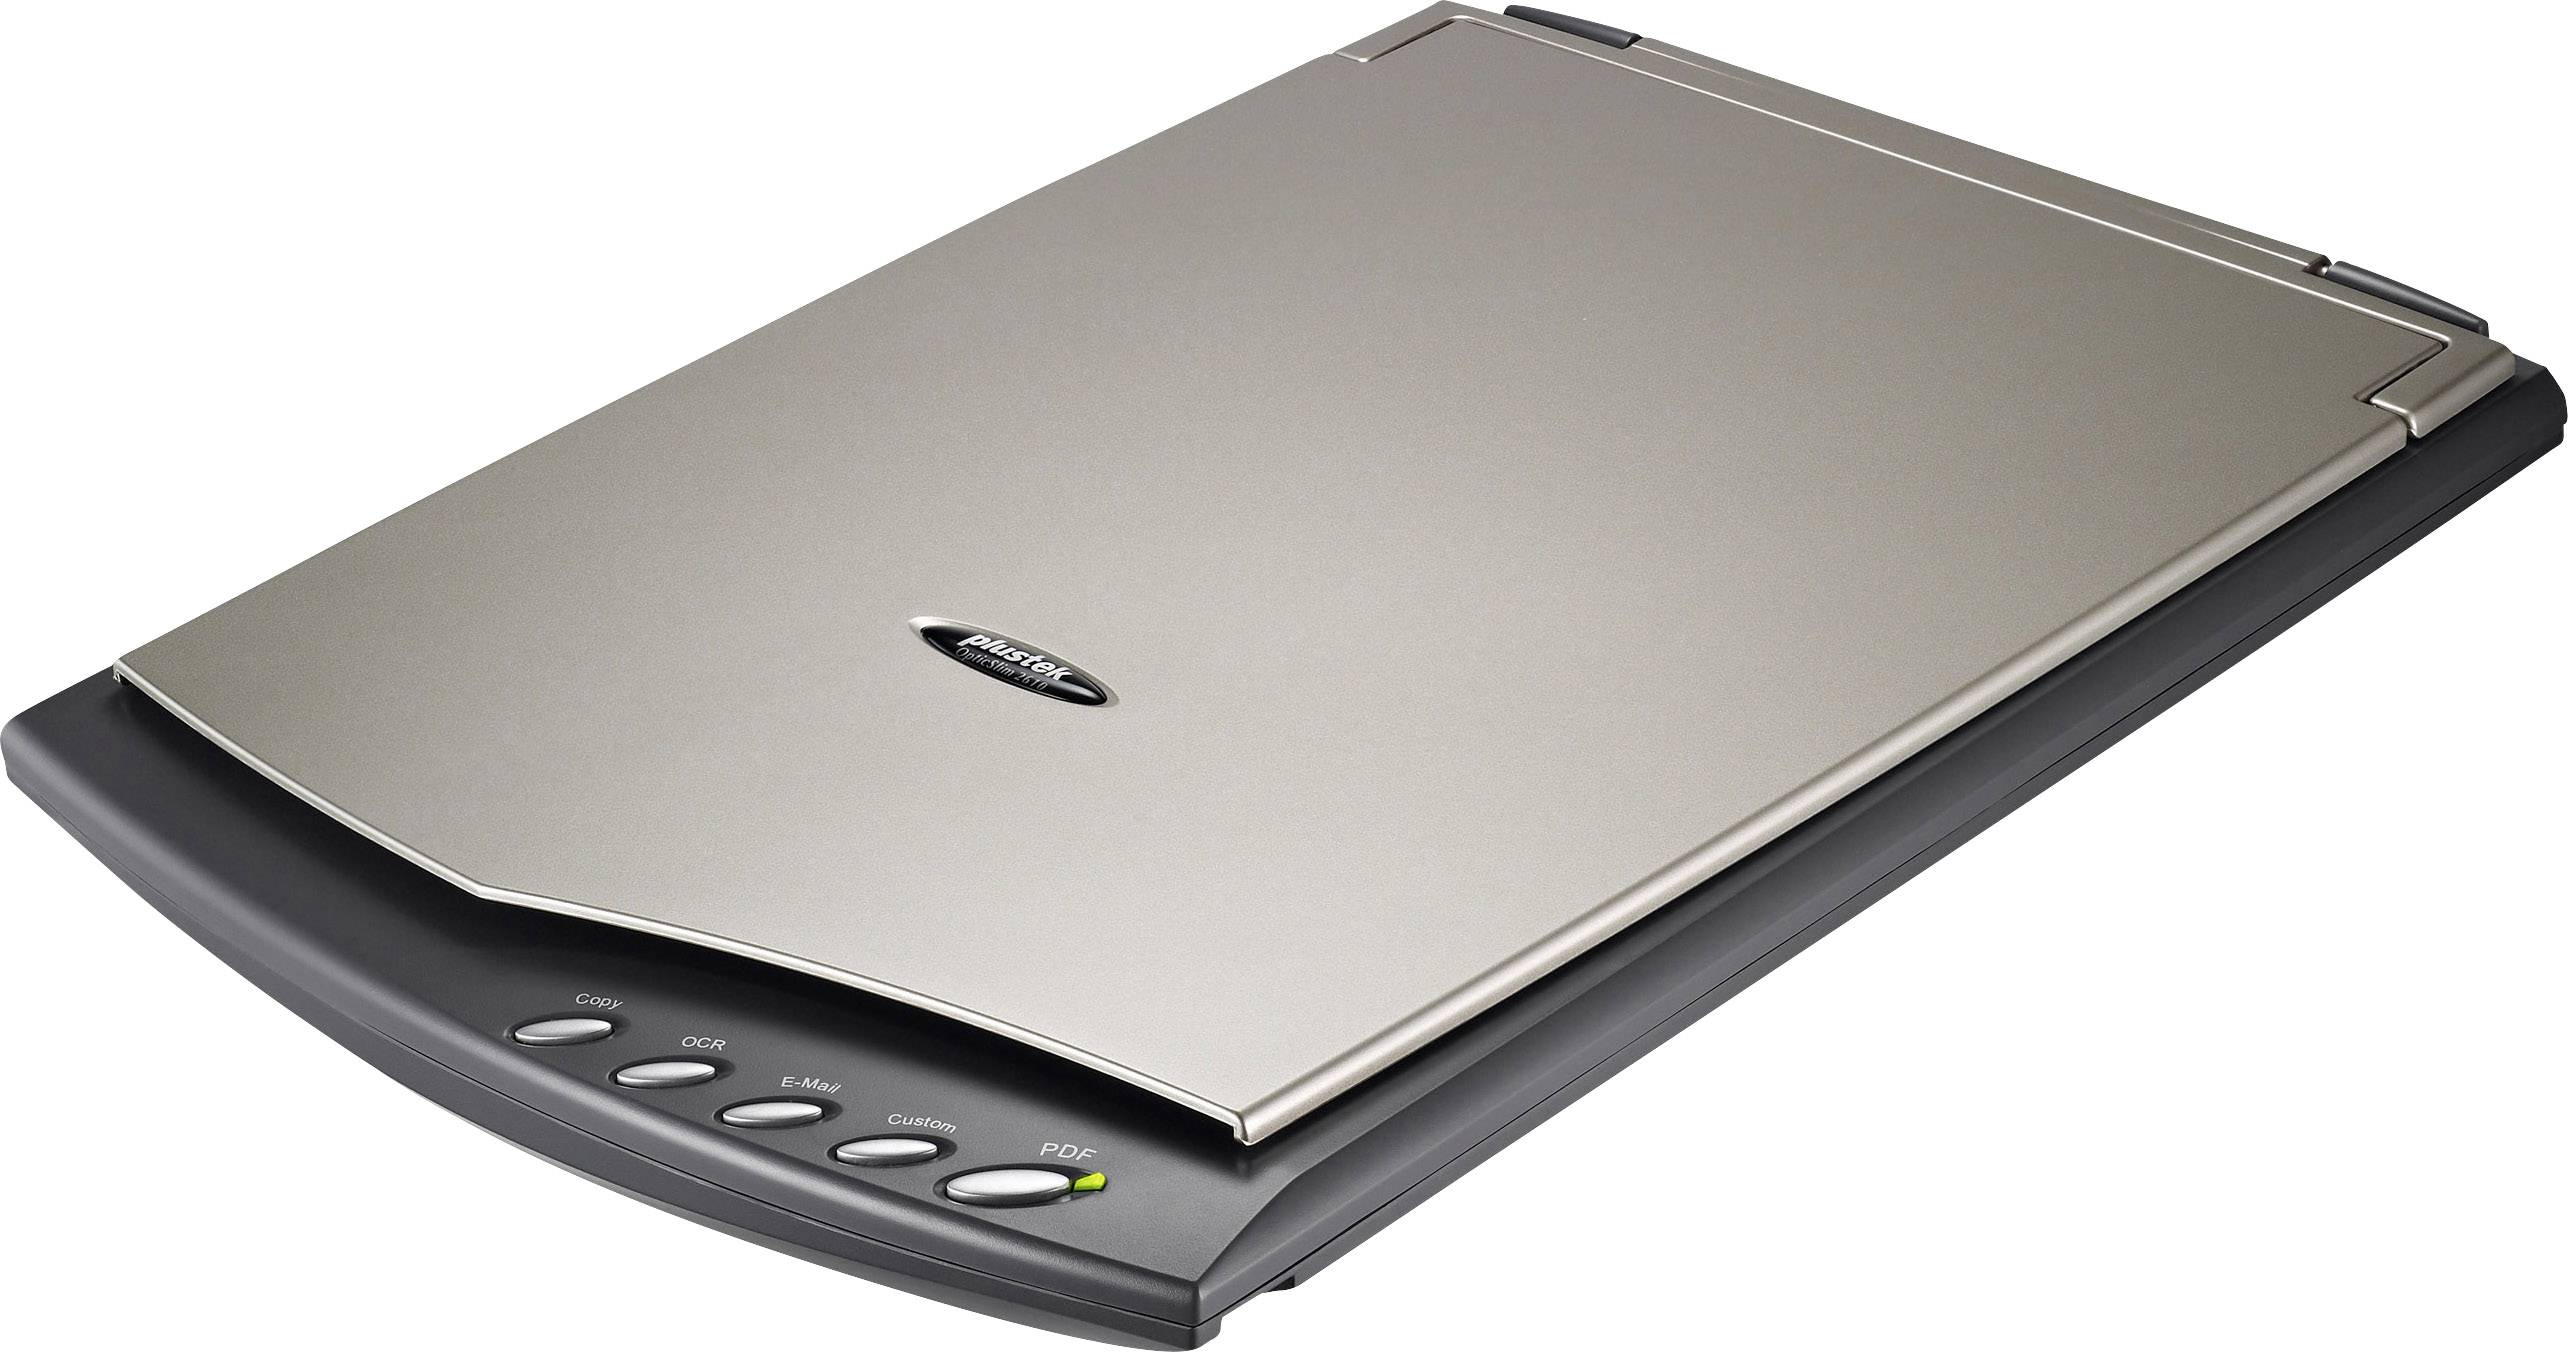 Plustek OpticSlim 2610 Plus Flatbed scanner A4 x 1200 dpi USB 2.0 | Conrad.com